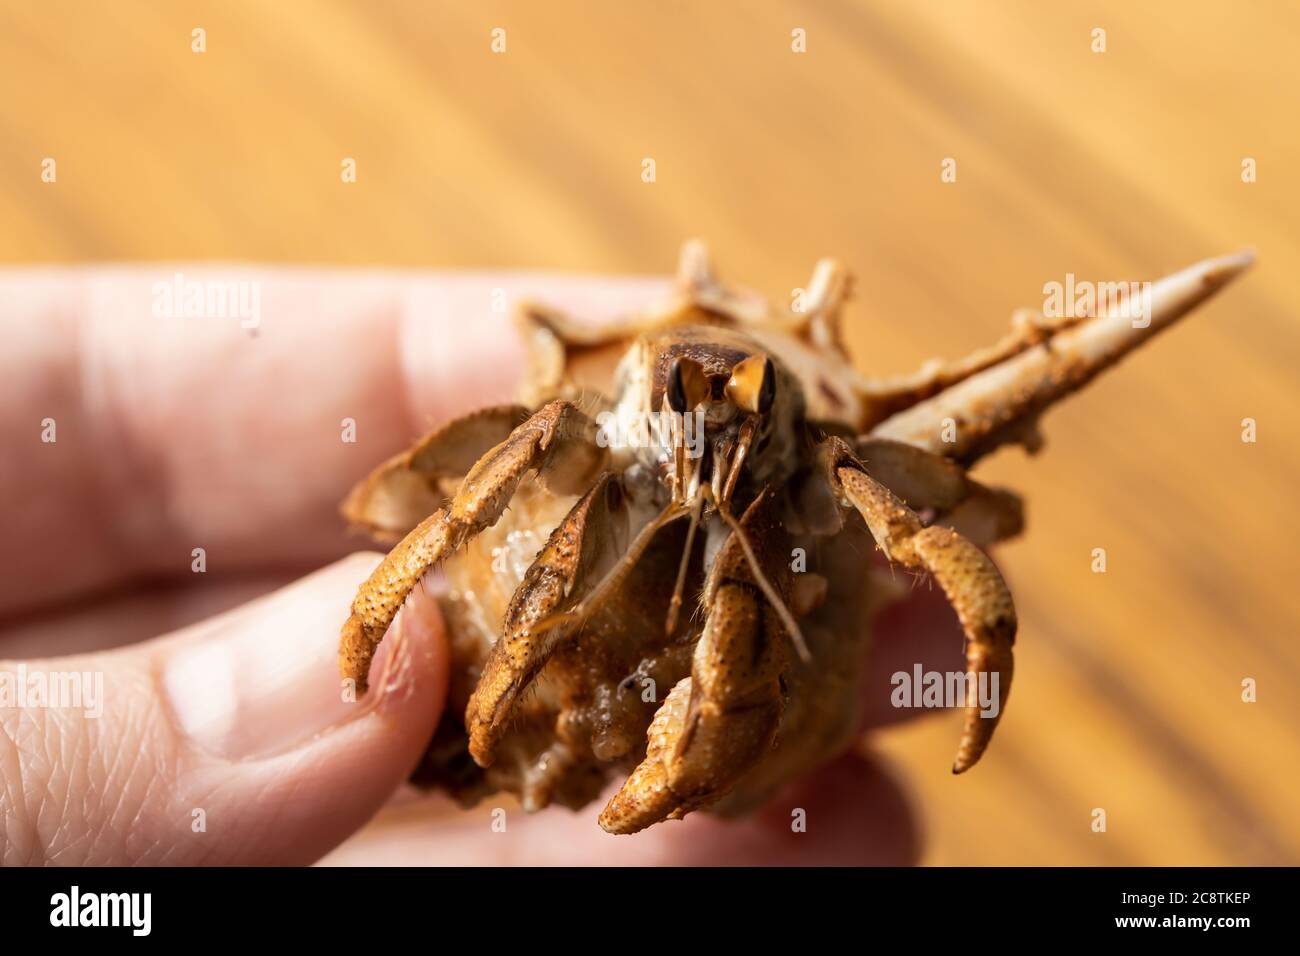 Australian Land Hermit Crab (Coenobita variabilis) being held by a hand Stock Photo